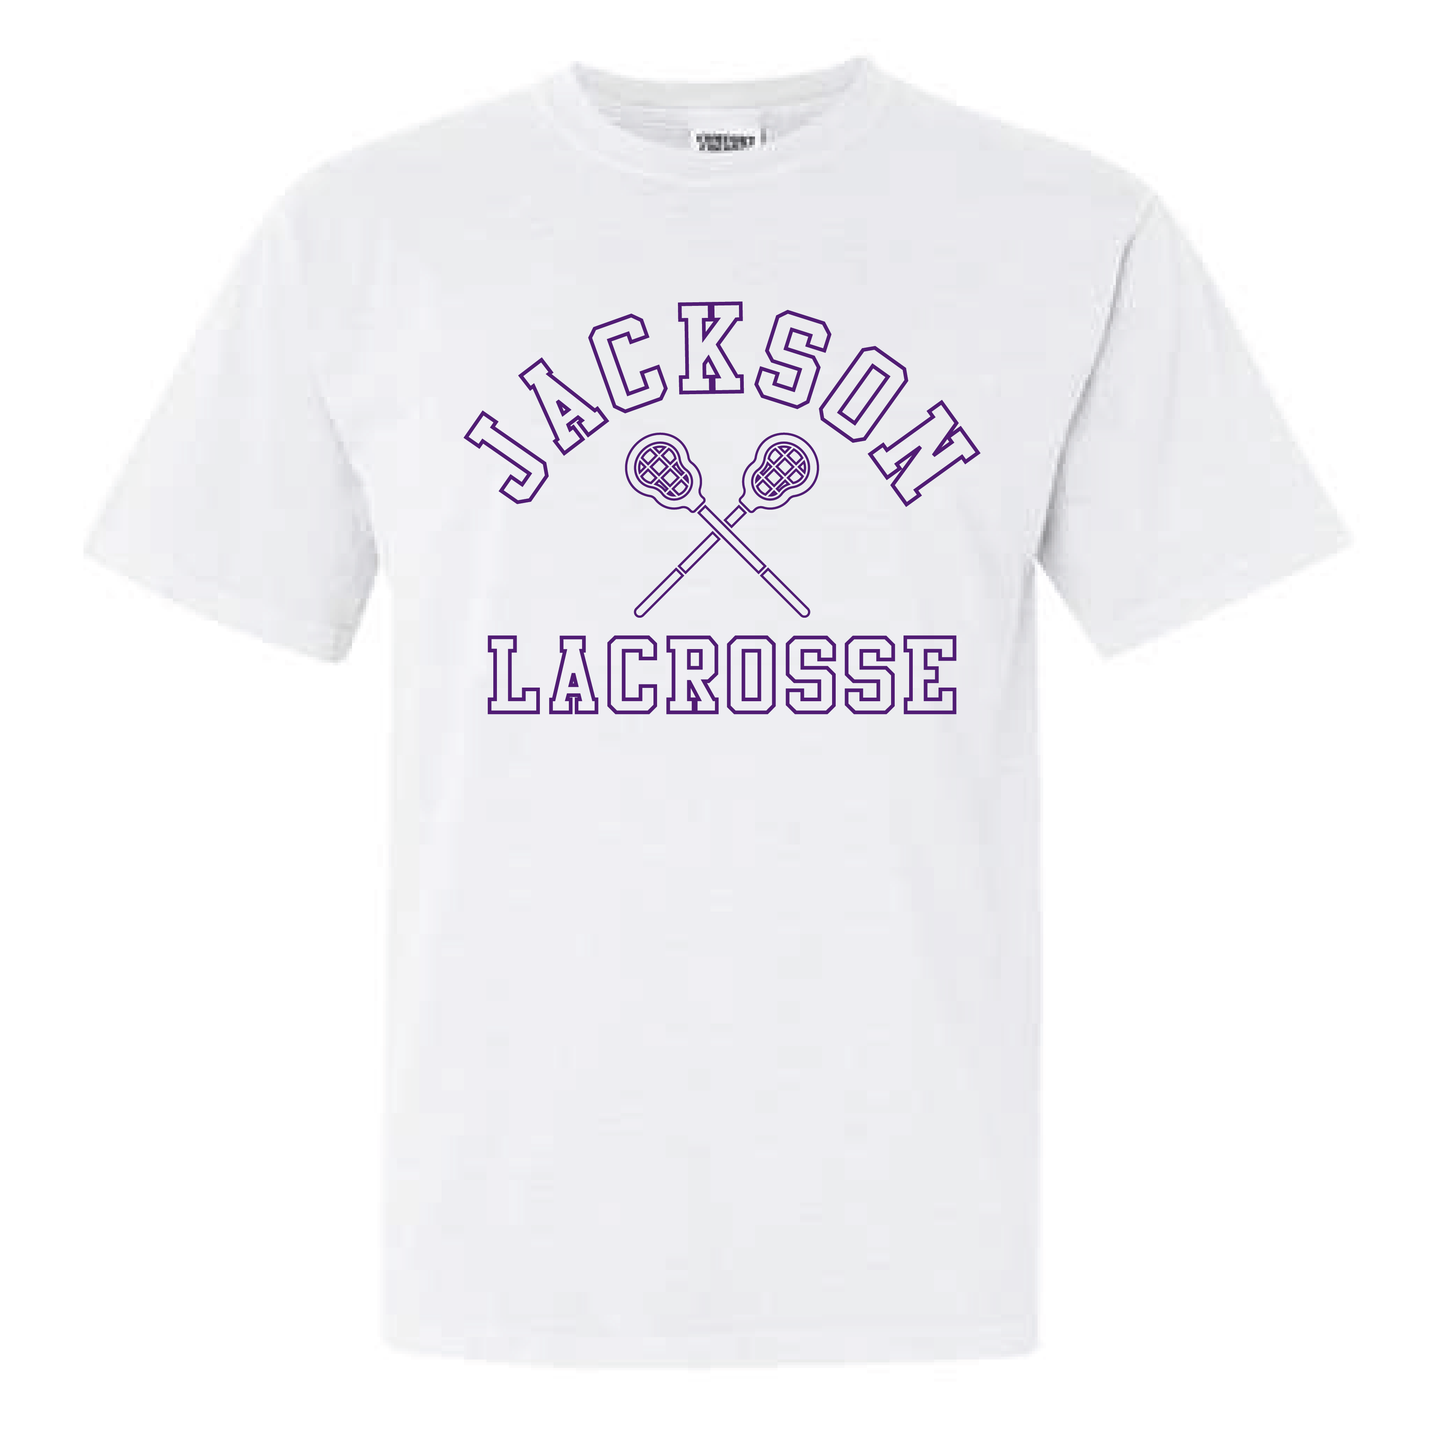 Jackson Lacrosse Vintage White T-shirt